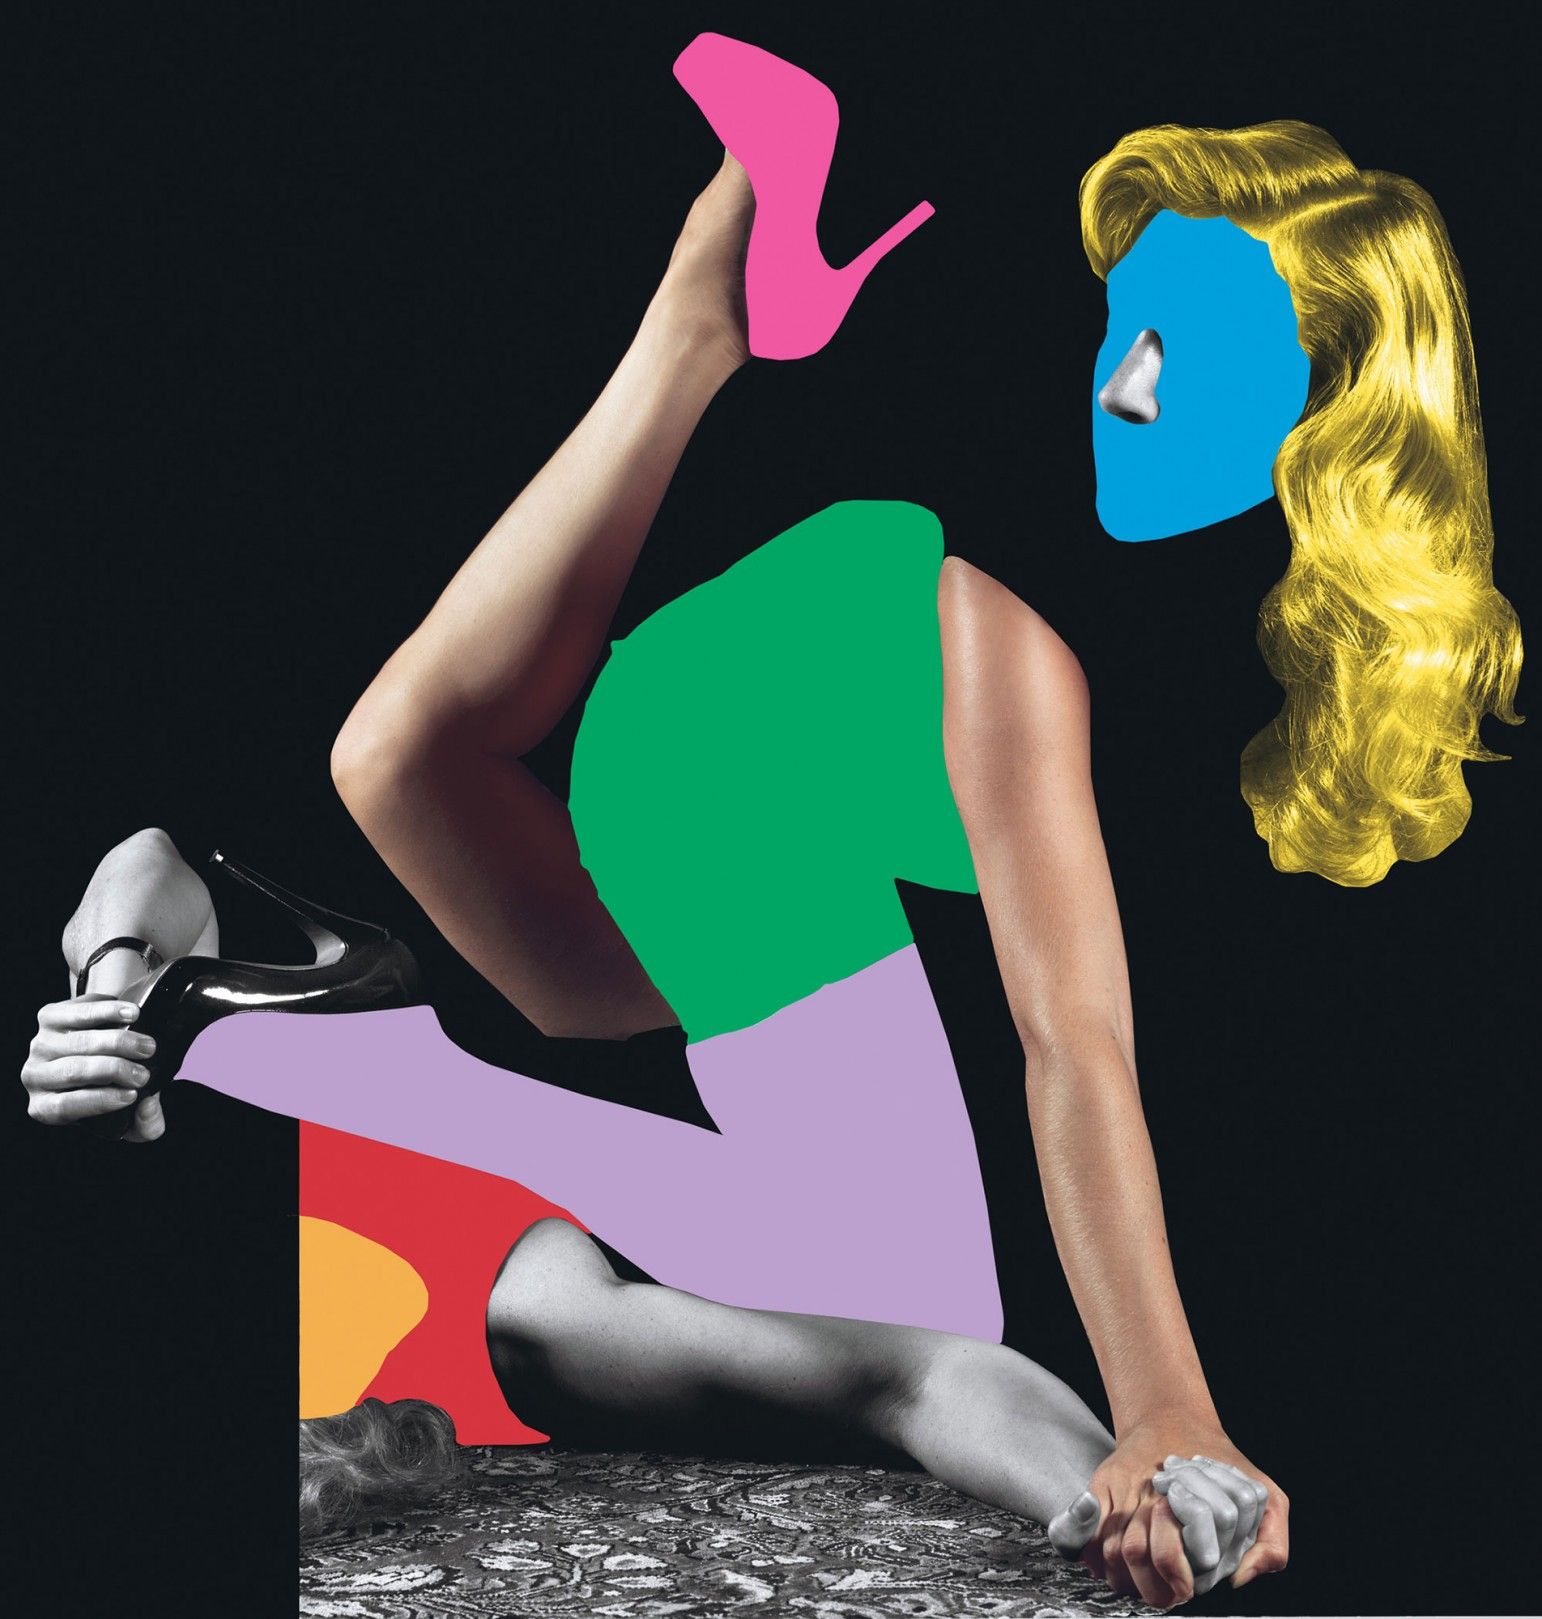 Mario Sorrenti and John Baldessari's shoot for W Magazine, featuring Christian Louboutin shoes